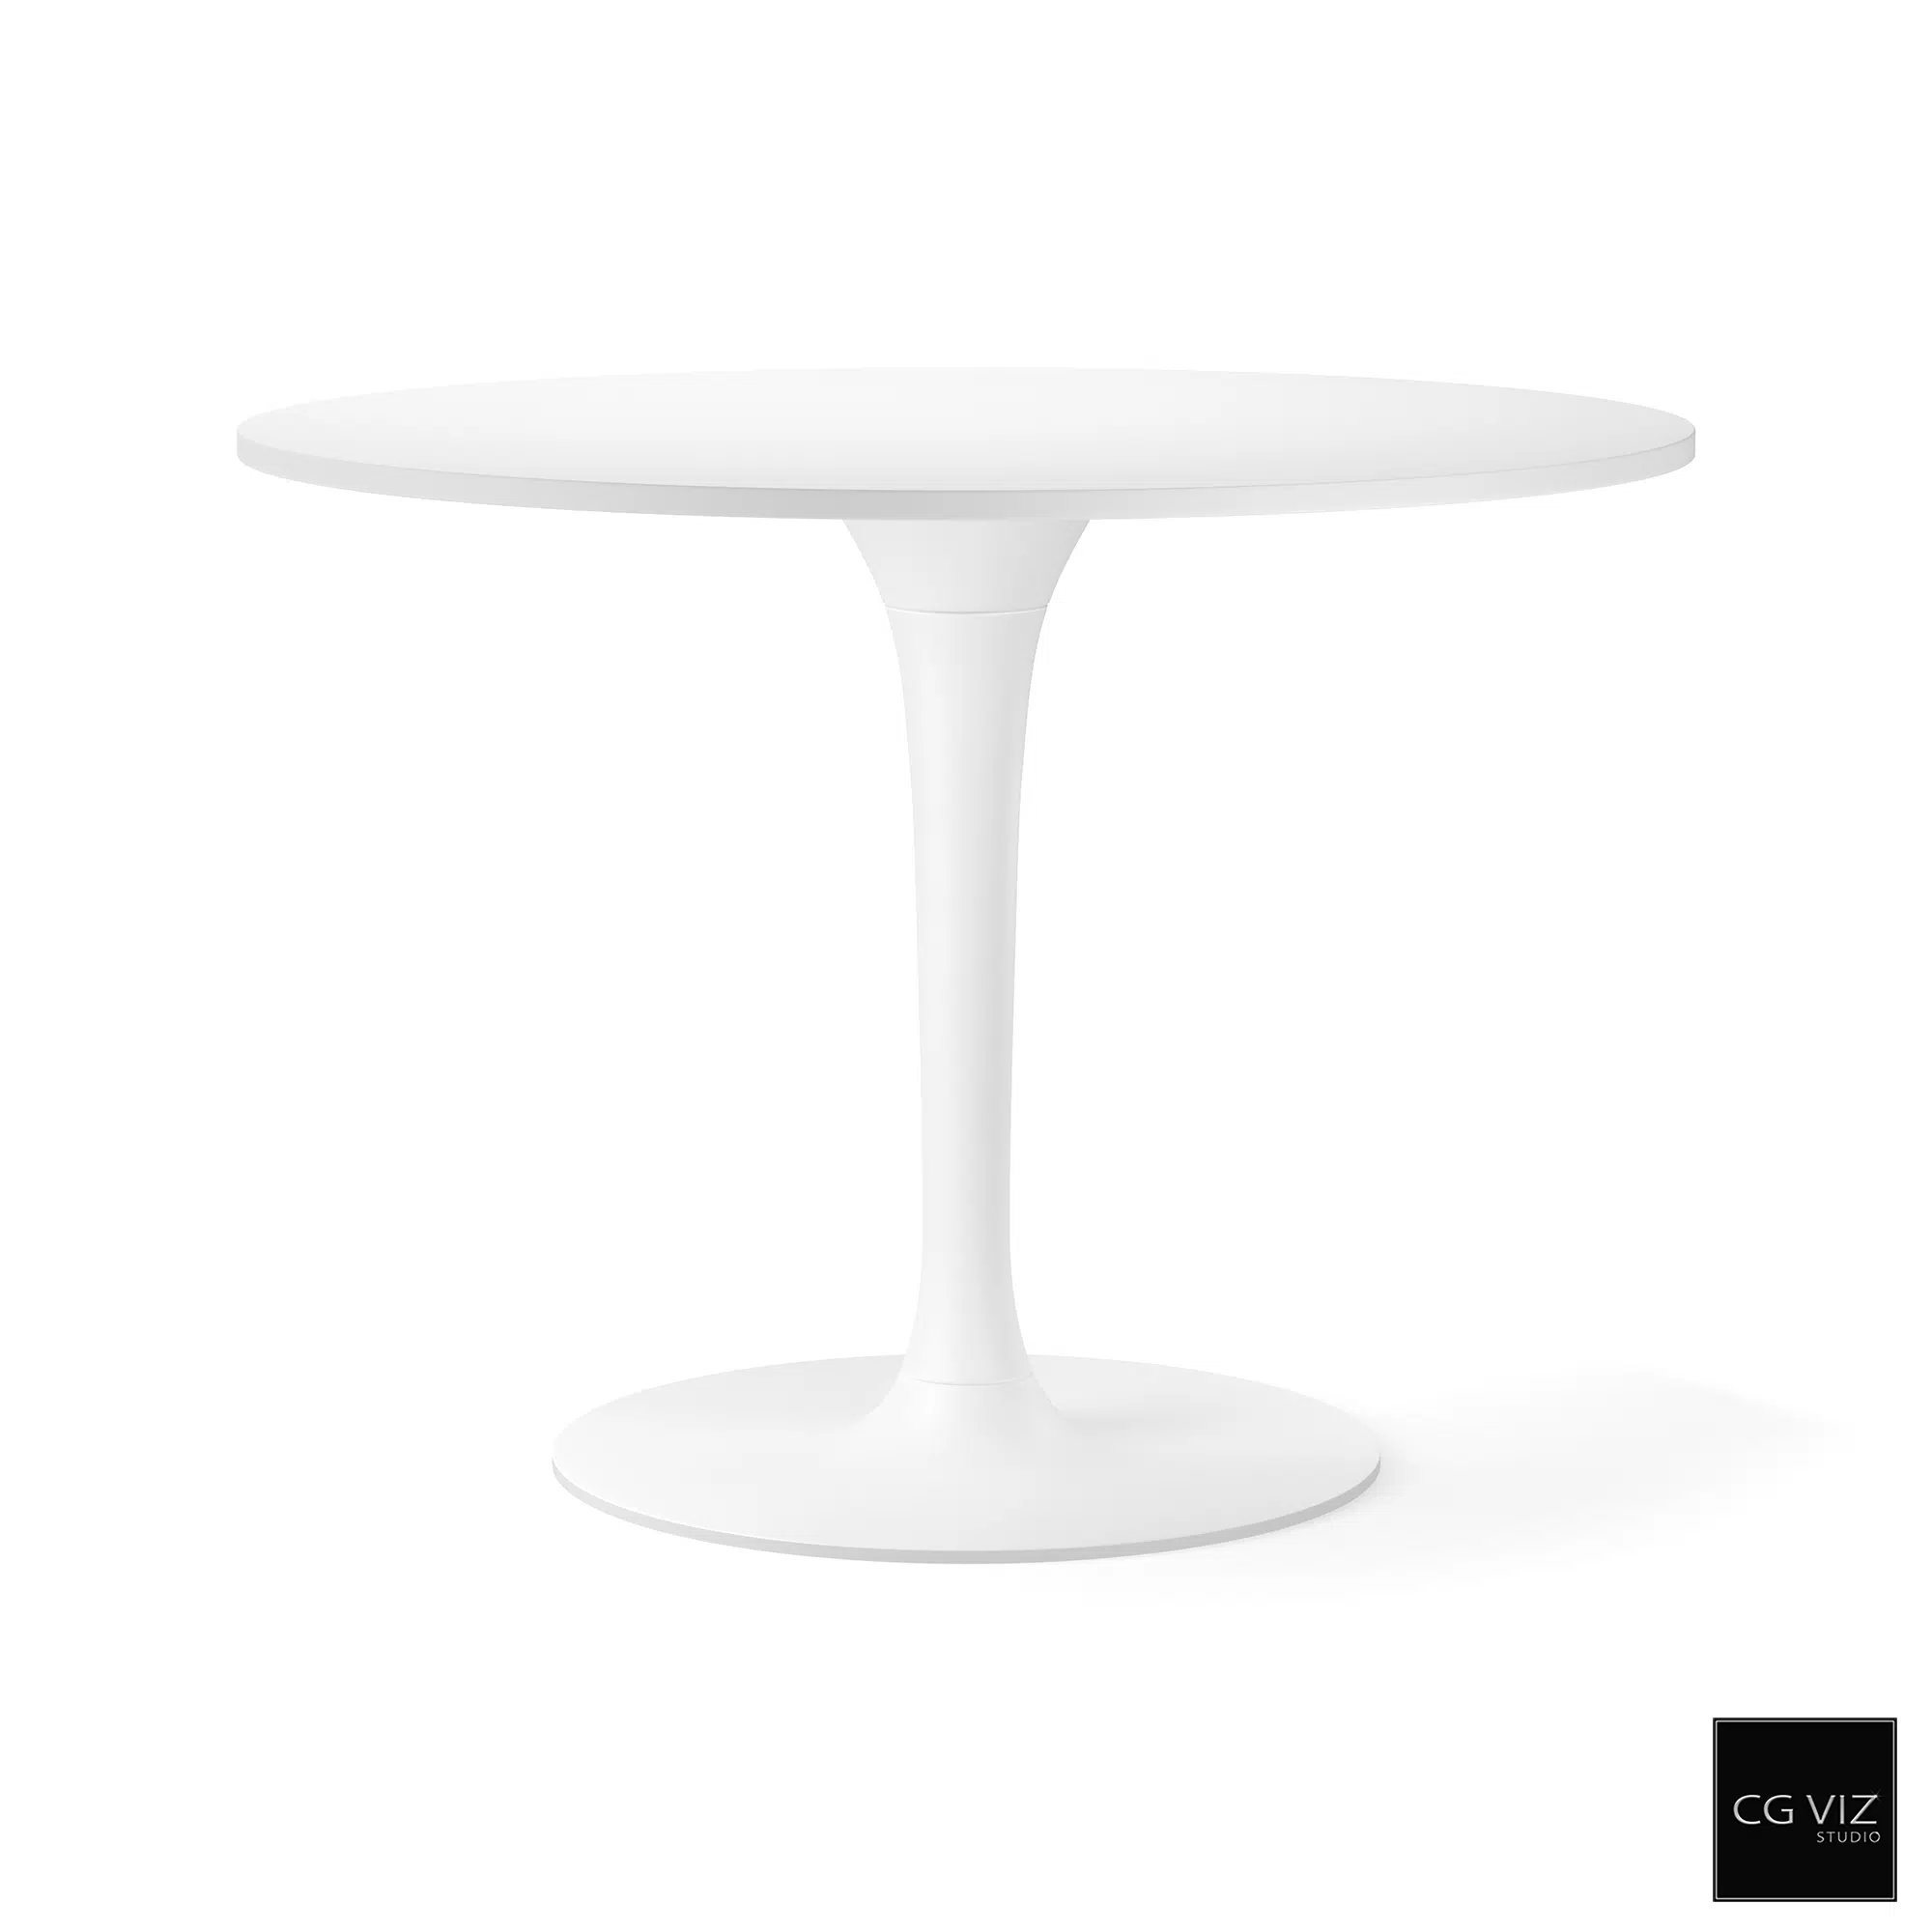 Rendered Preview of IKEA Docksta Table 3D Model by CG Viz Studio